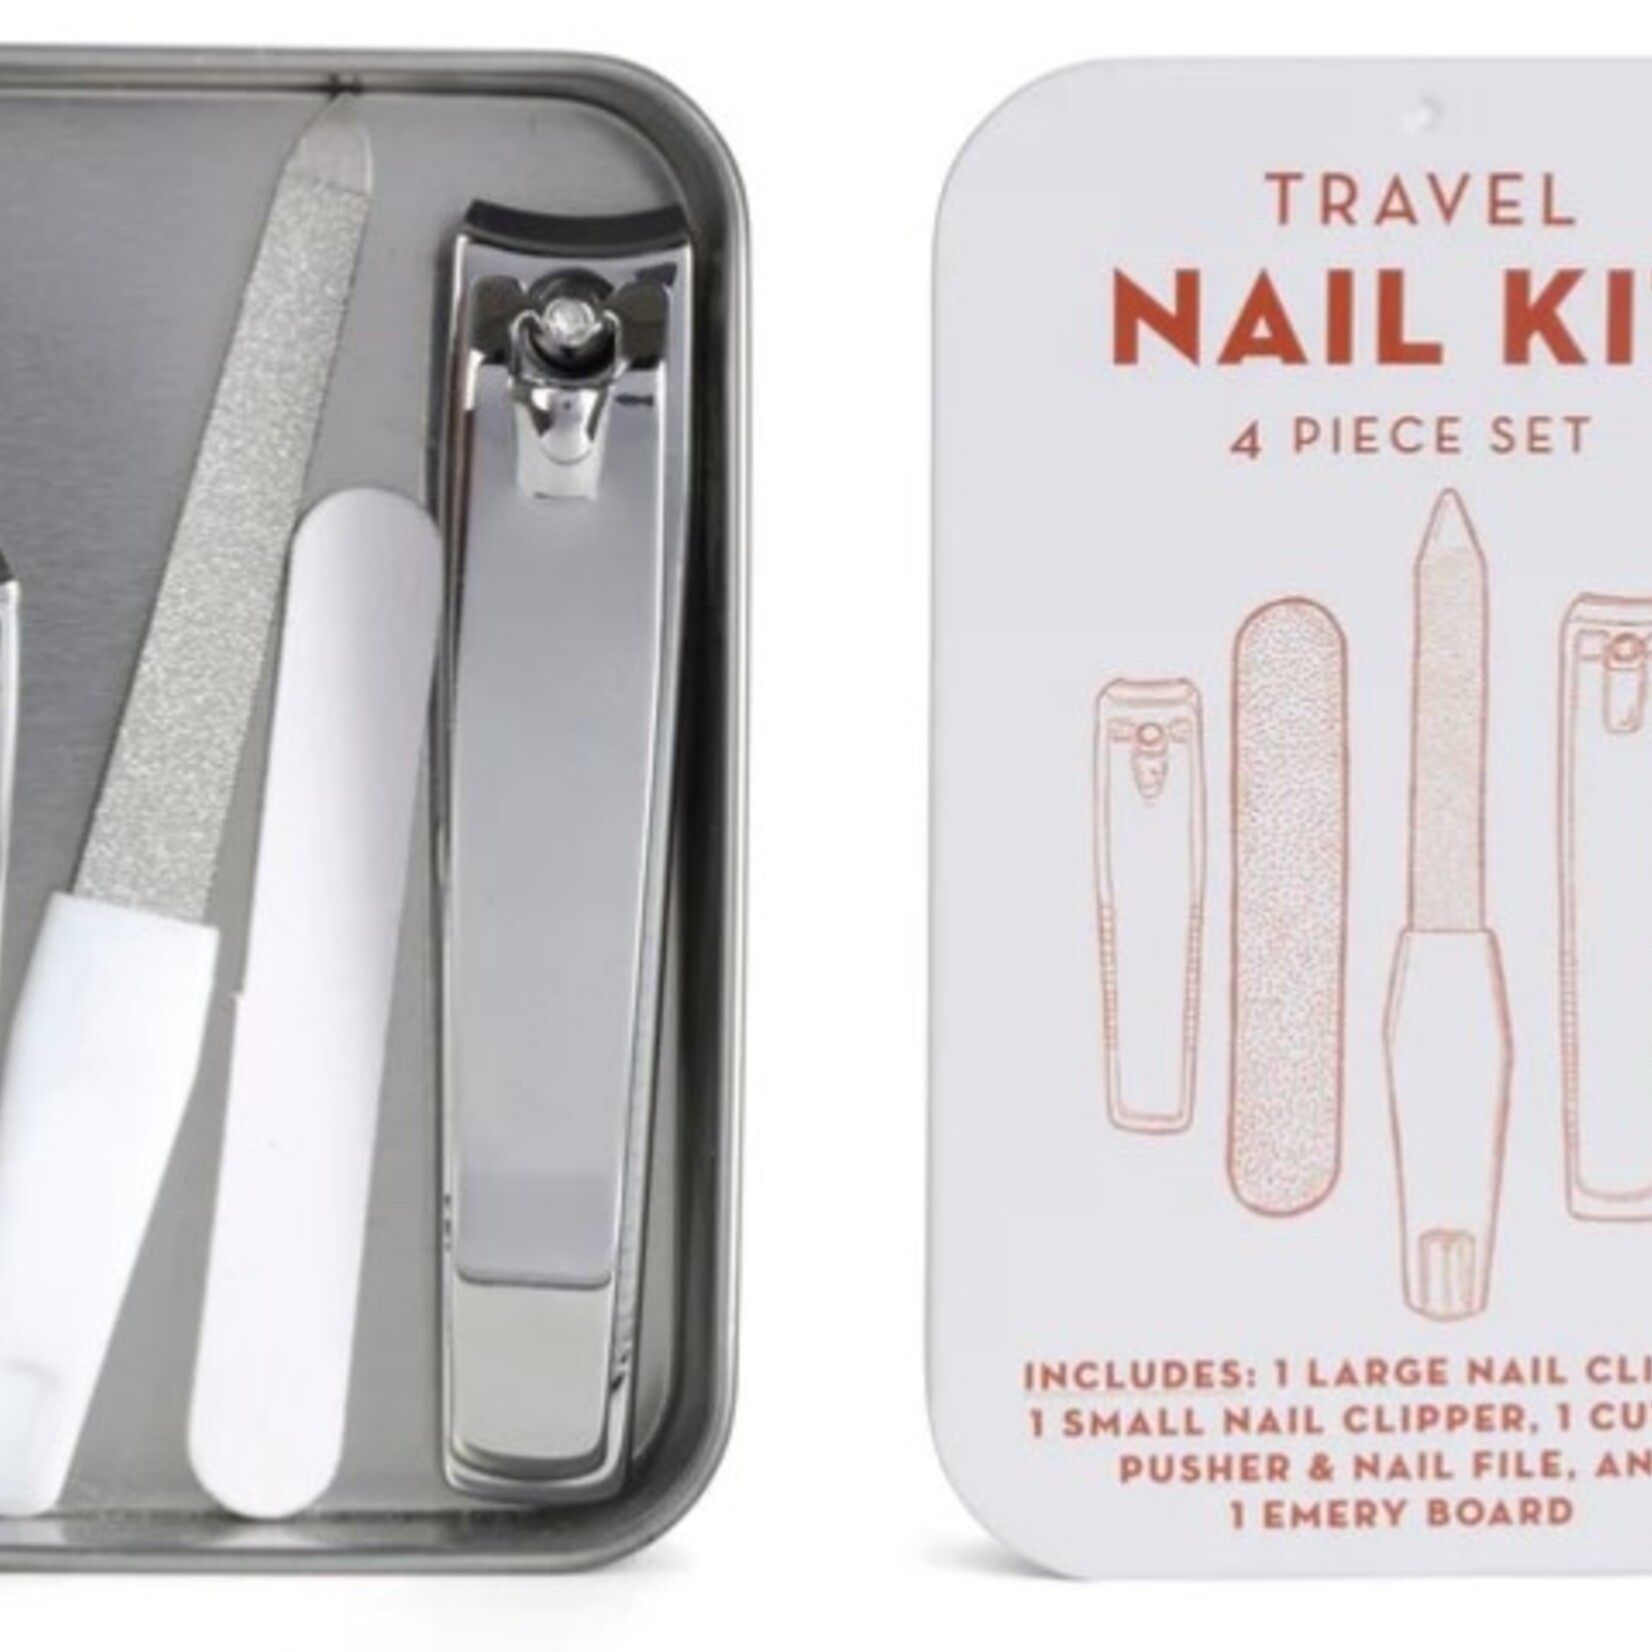 Accessories Travel Nail Kit